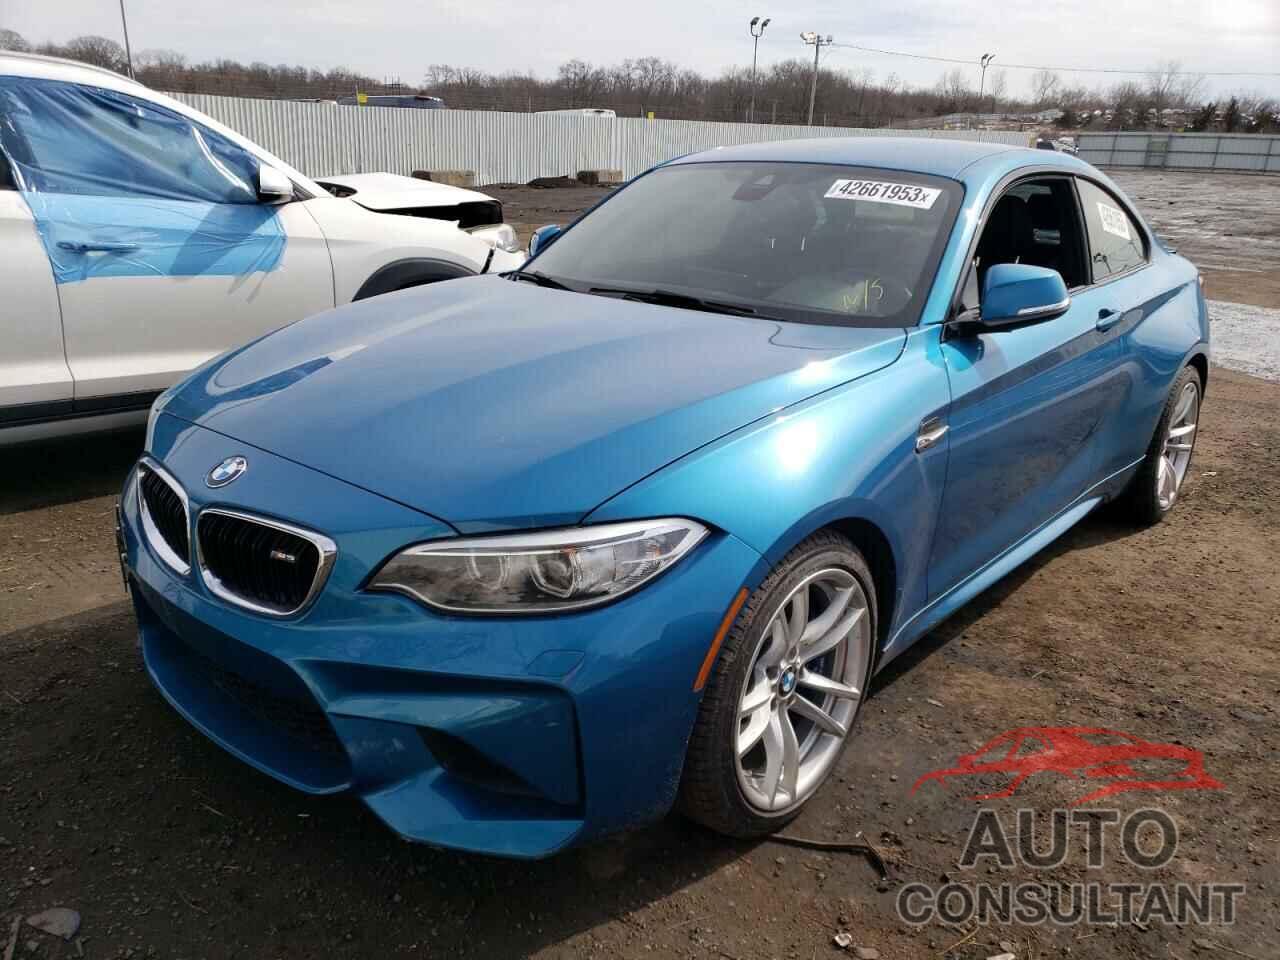 BMW M2 2017 - WBS1H9C56HV786712